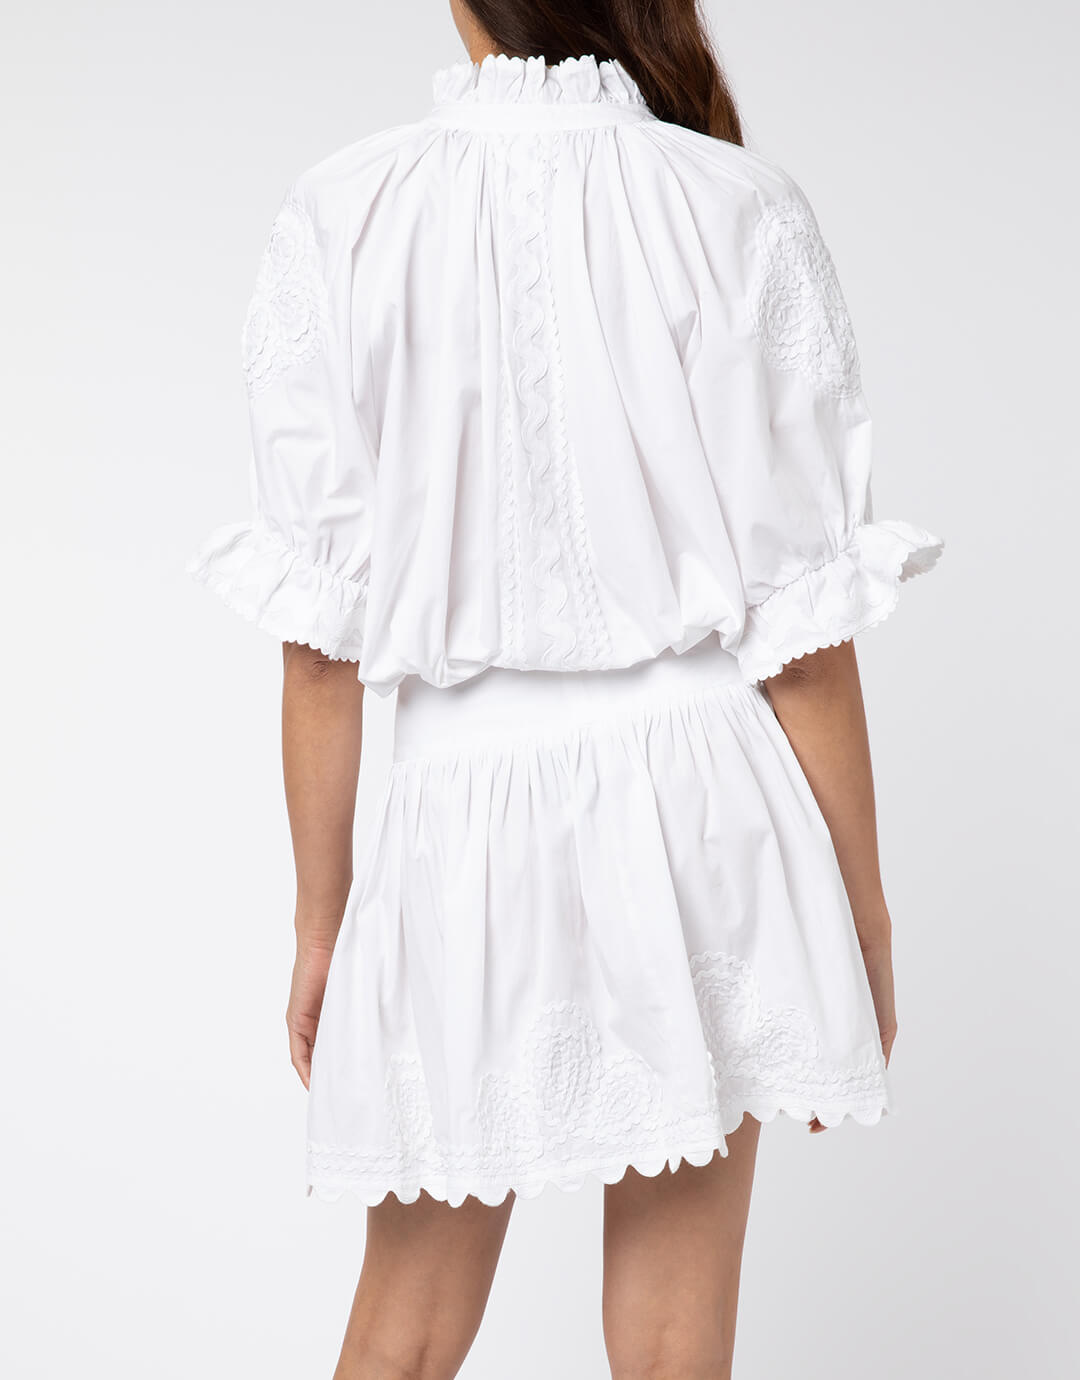 Poplin Blouson Dress with Ric-Rac Embroidery - White - Simply Beach UK